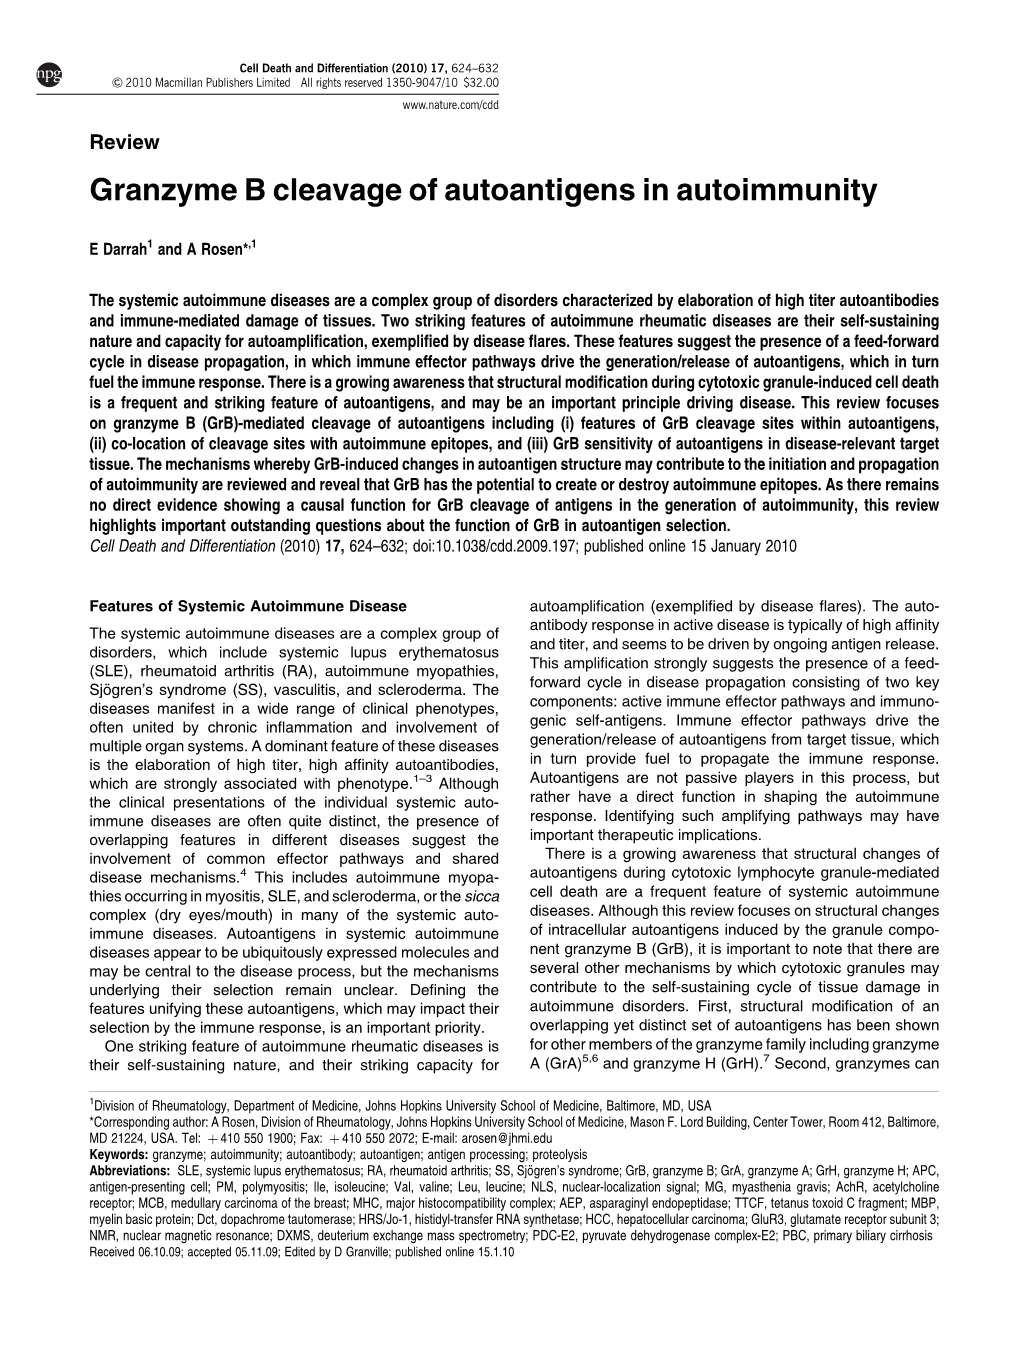 Granzyme B Cleavage of Autoantigens in Autoimmunity